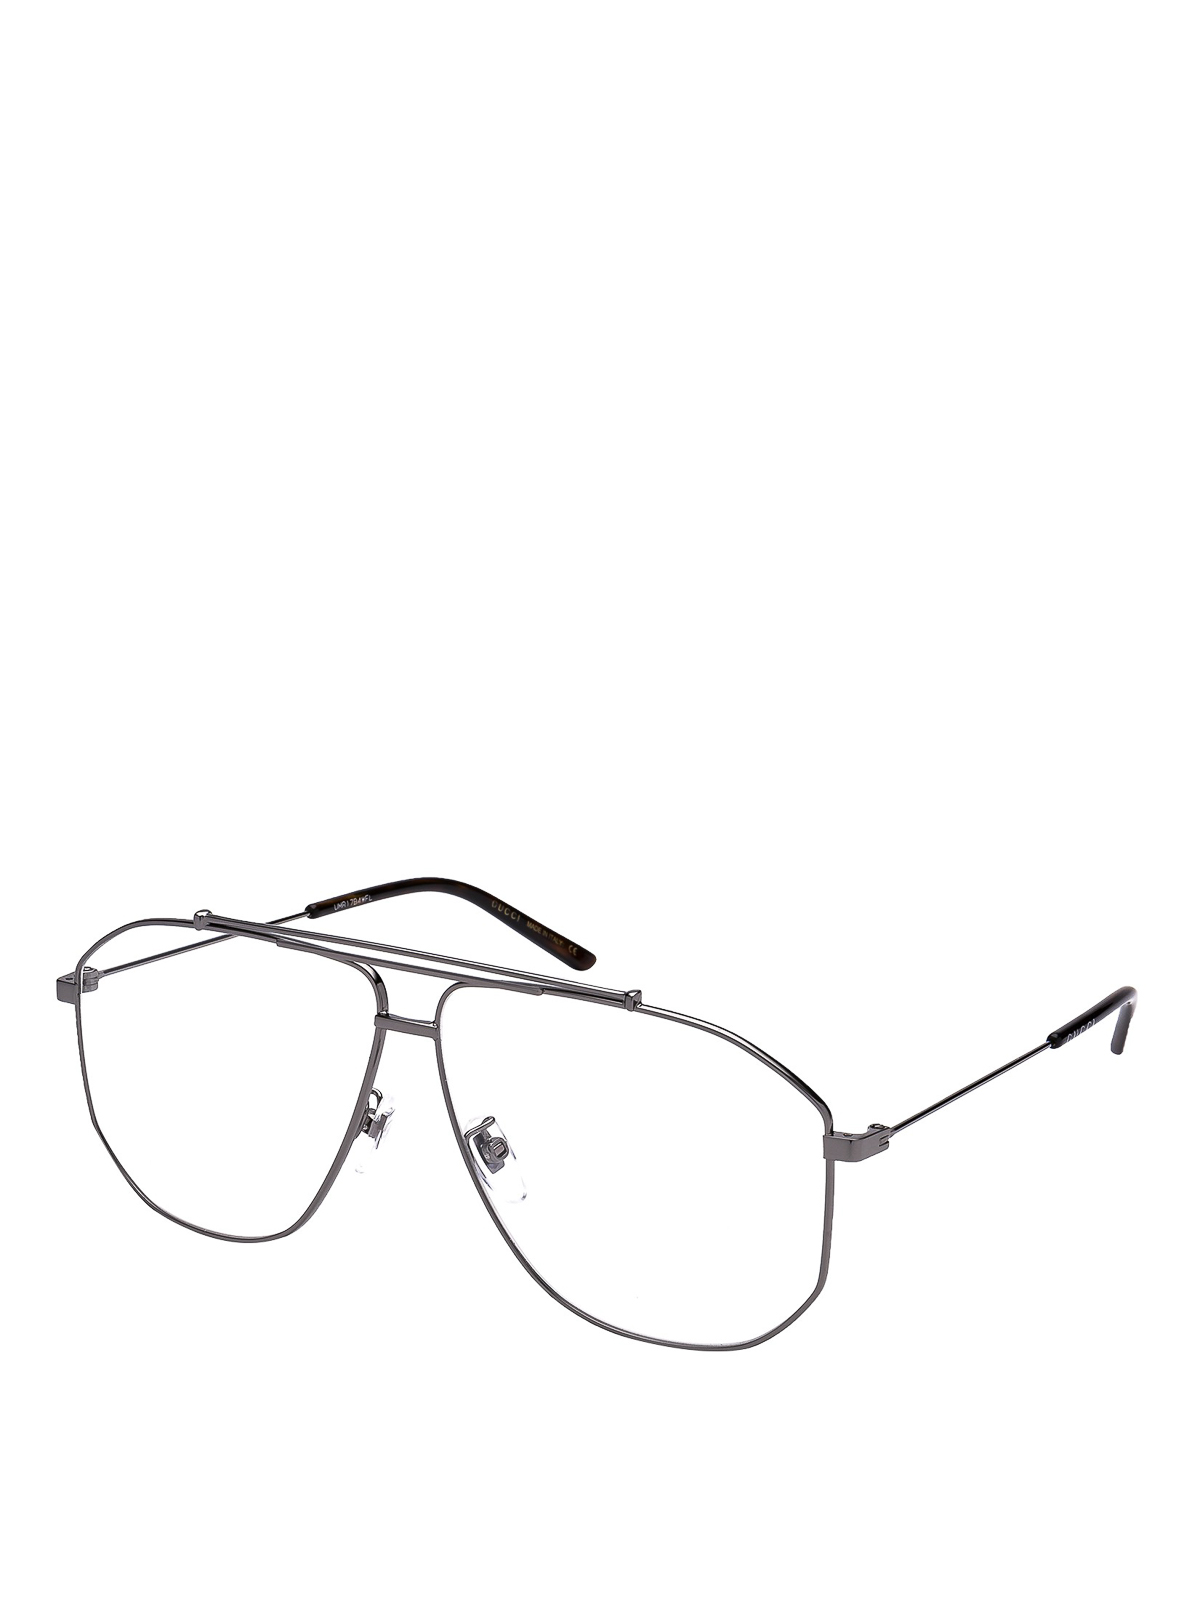 gucci aviator optical glasses